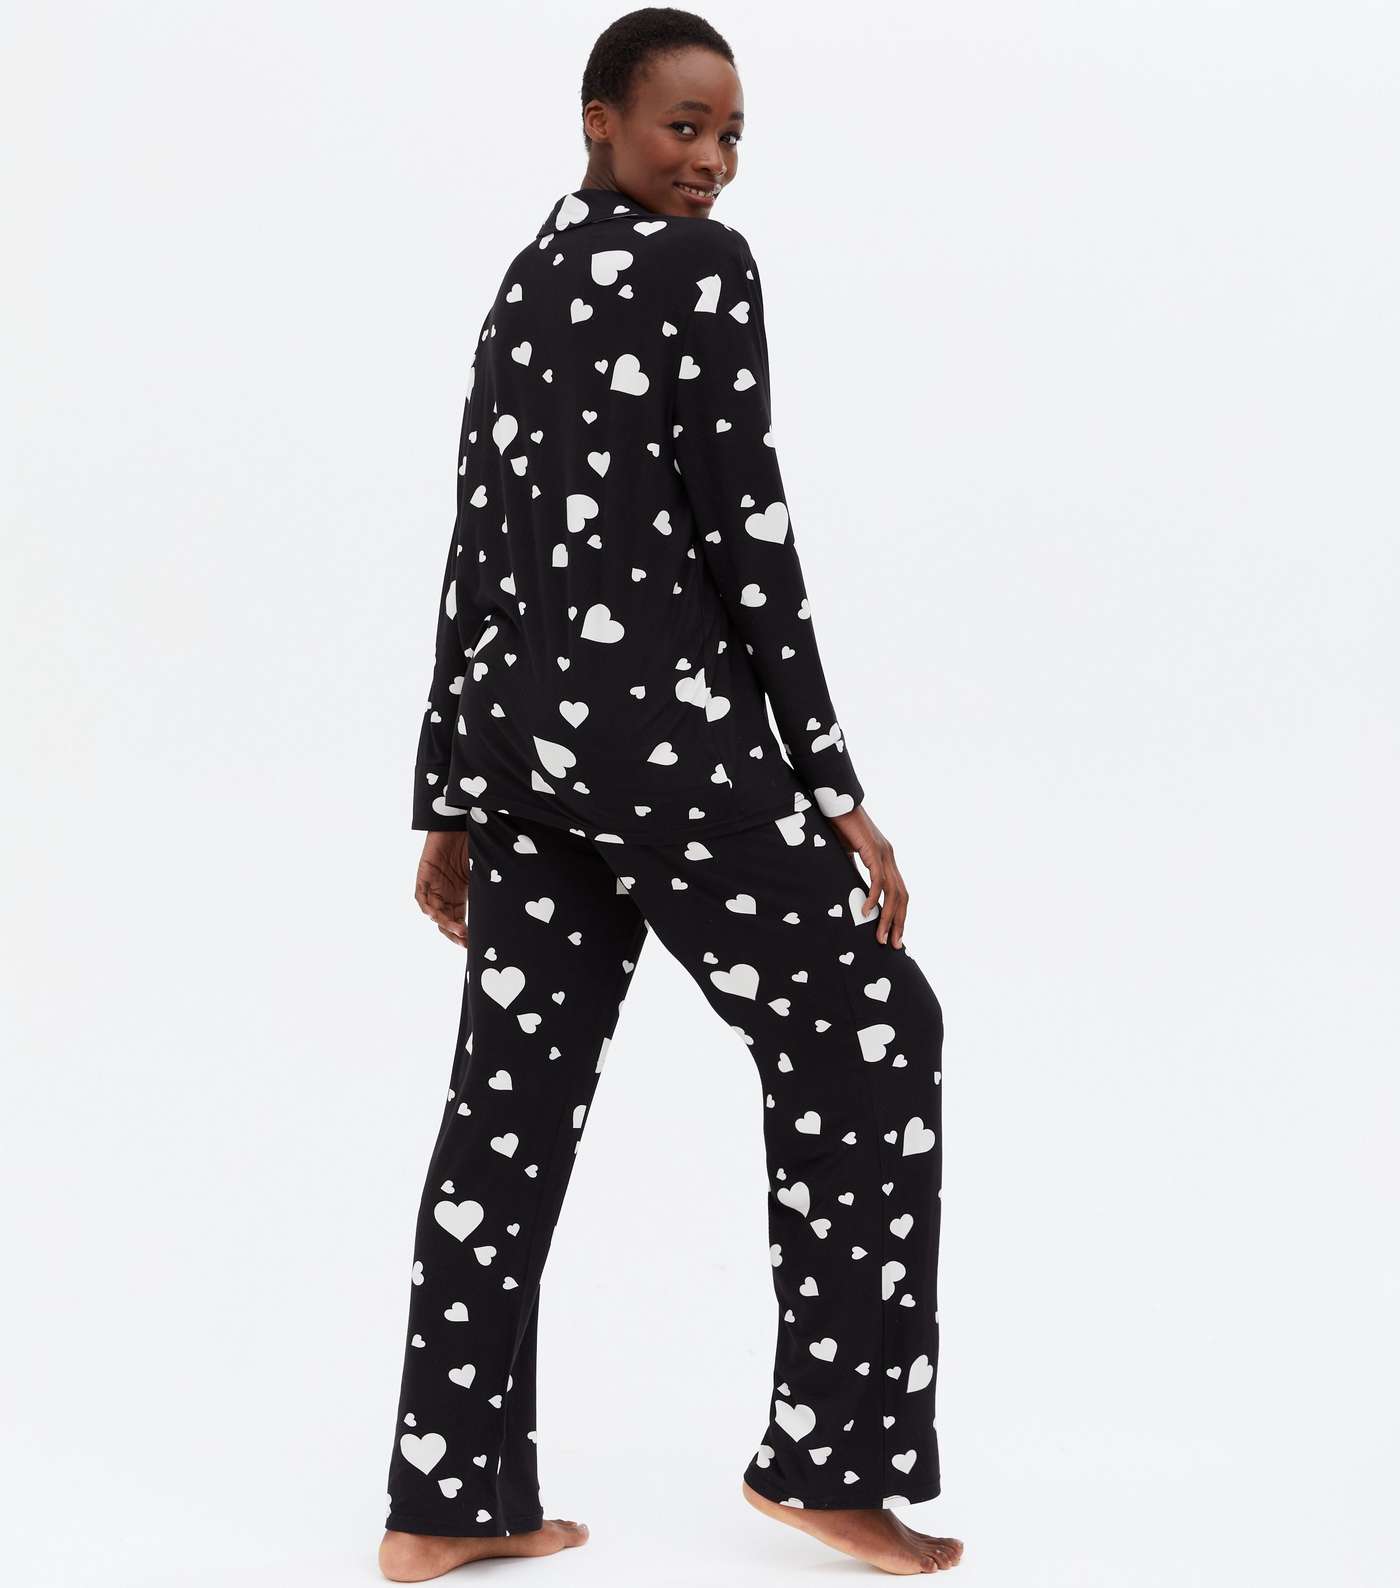 Black Trouser Pyjama Set with Heart Print Image 4